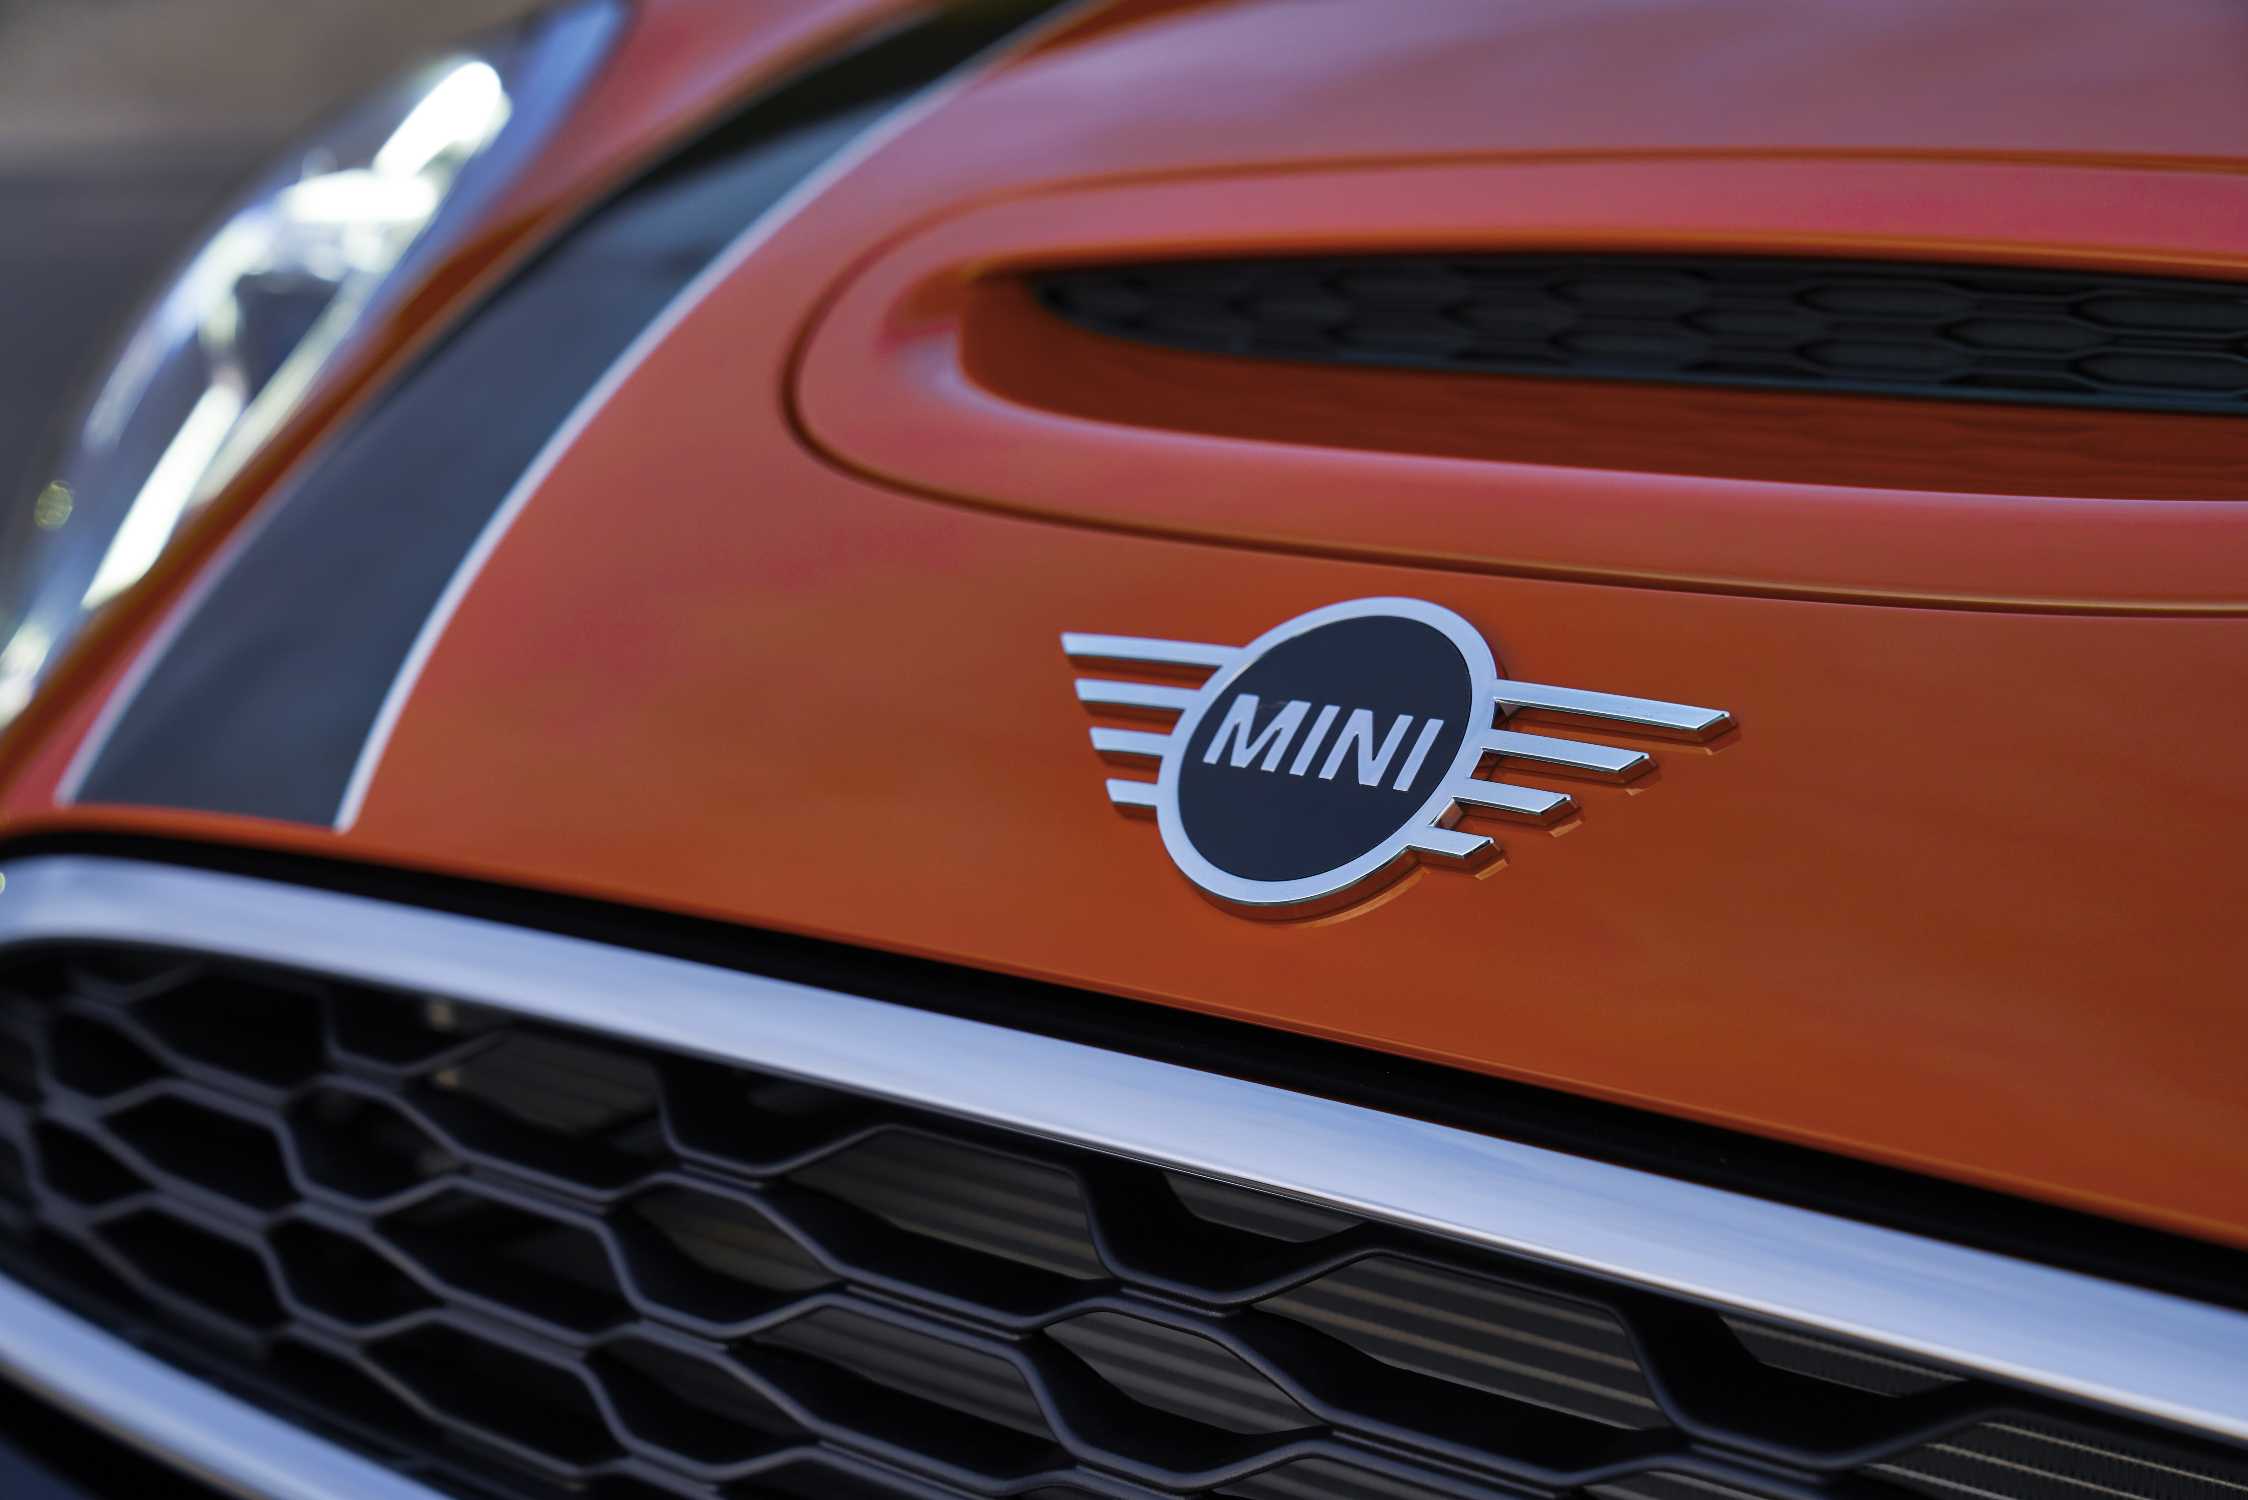 New Mini Logo - MINI Cooper S 3 Door With New MINI Logo (01 2018)